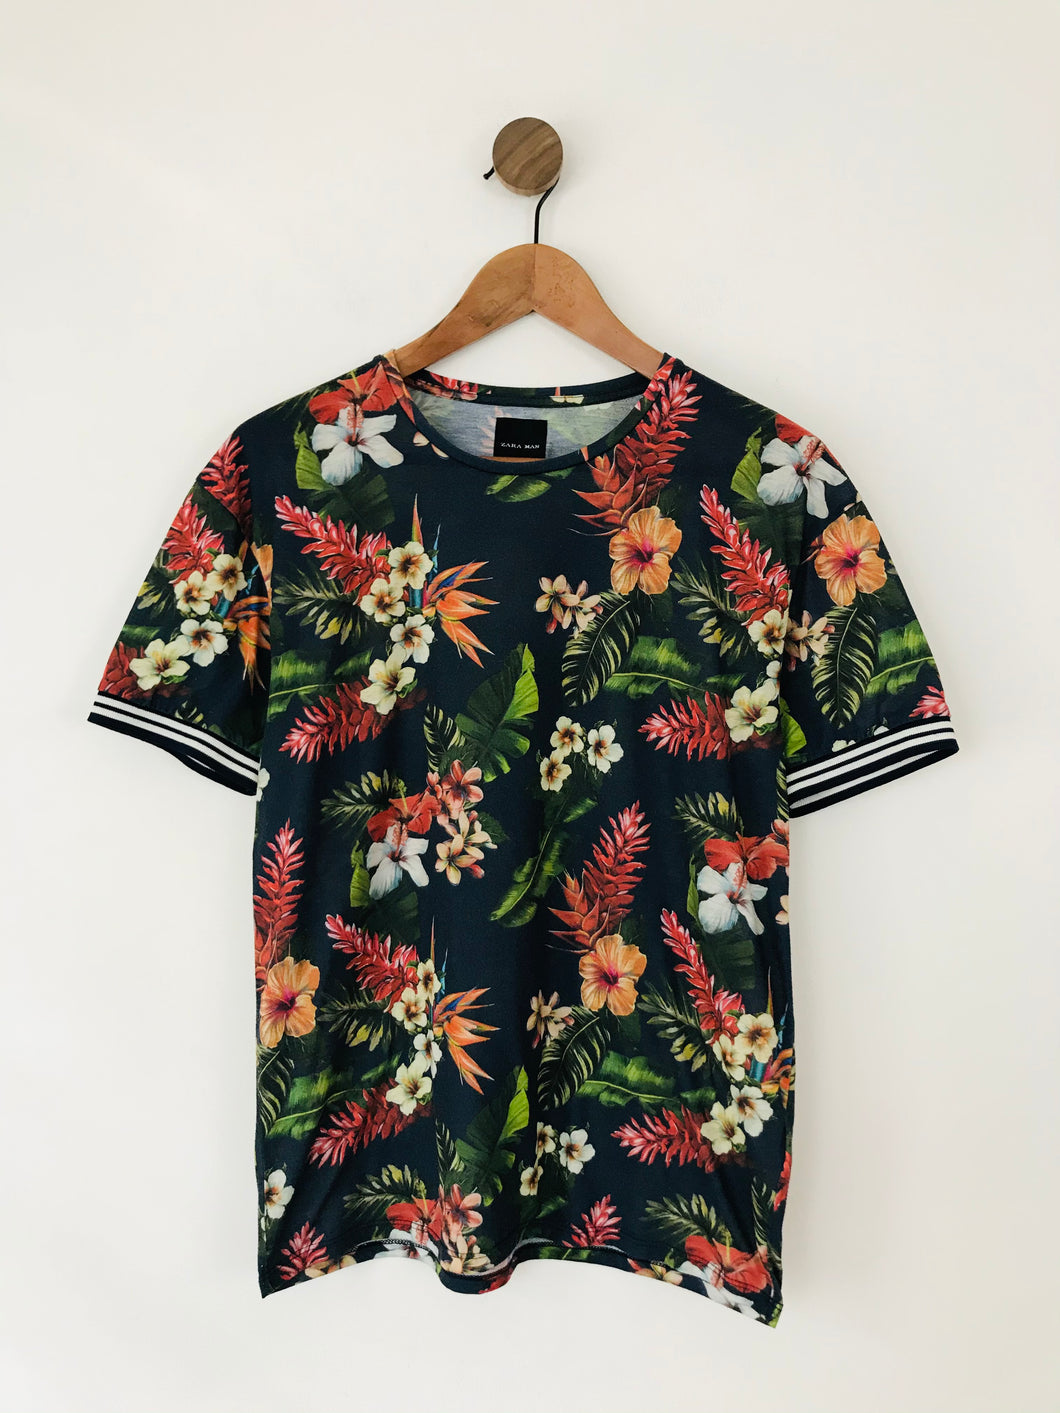 Zara Men’s Tropical Floral Print T-shirt | M | Multicolour